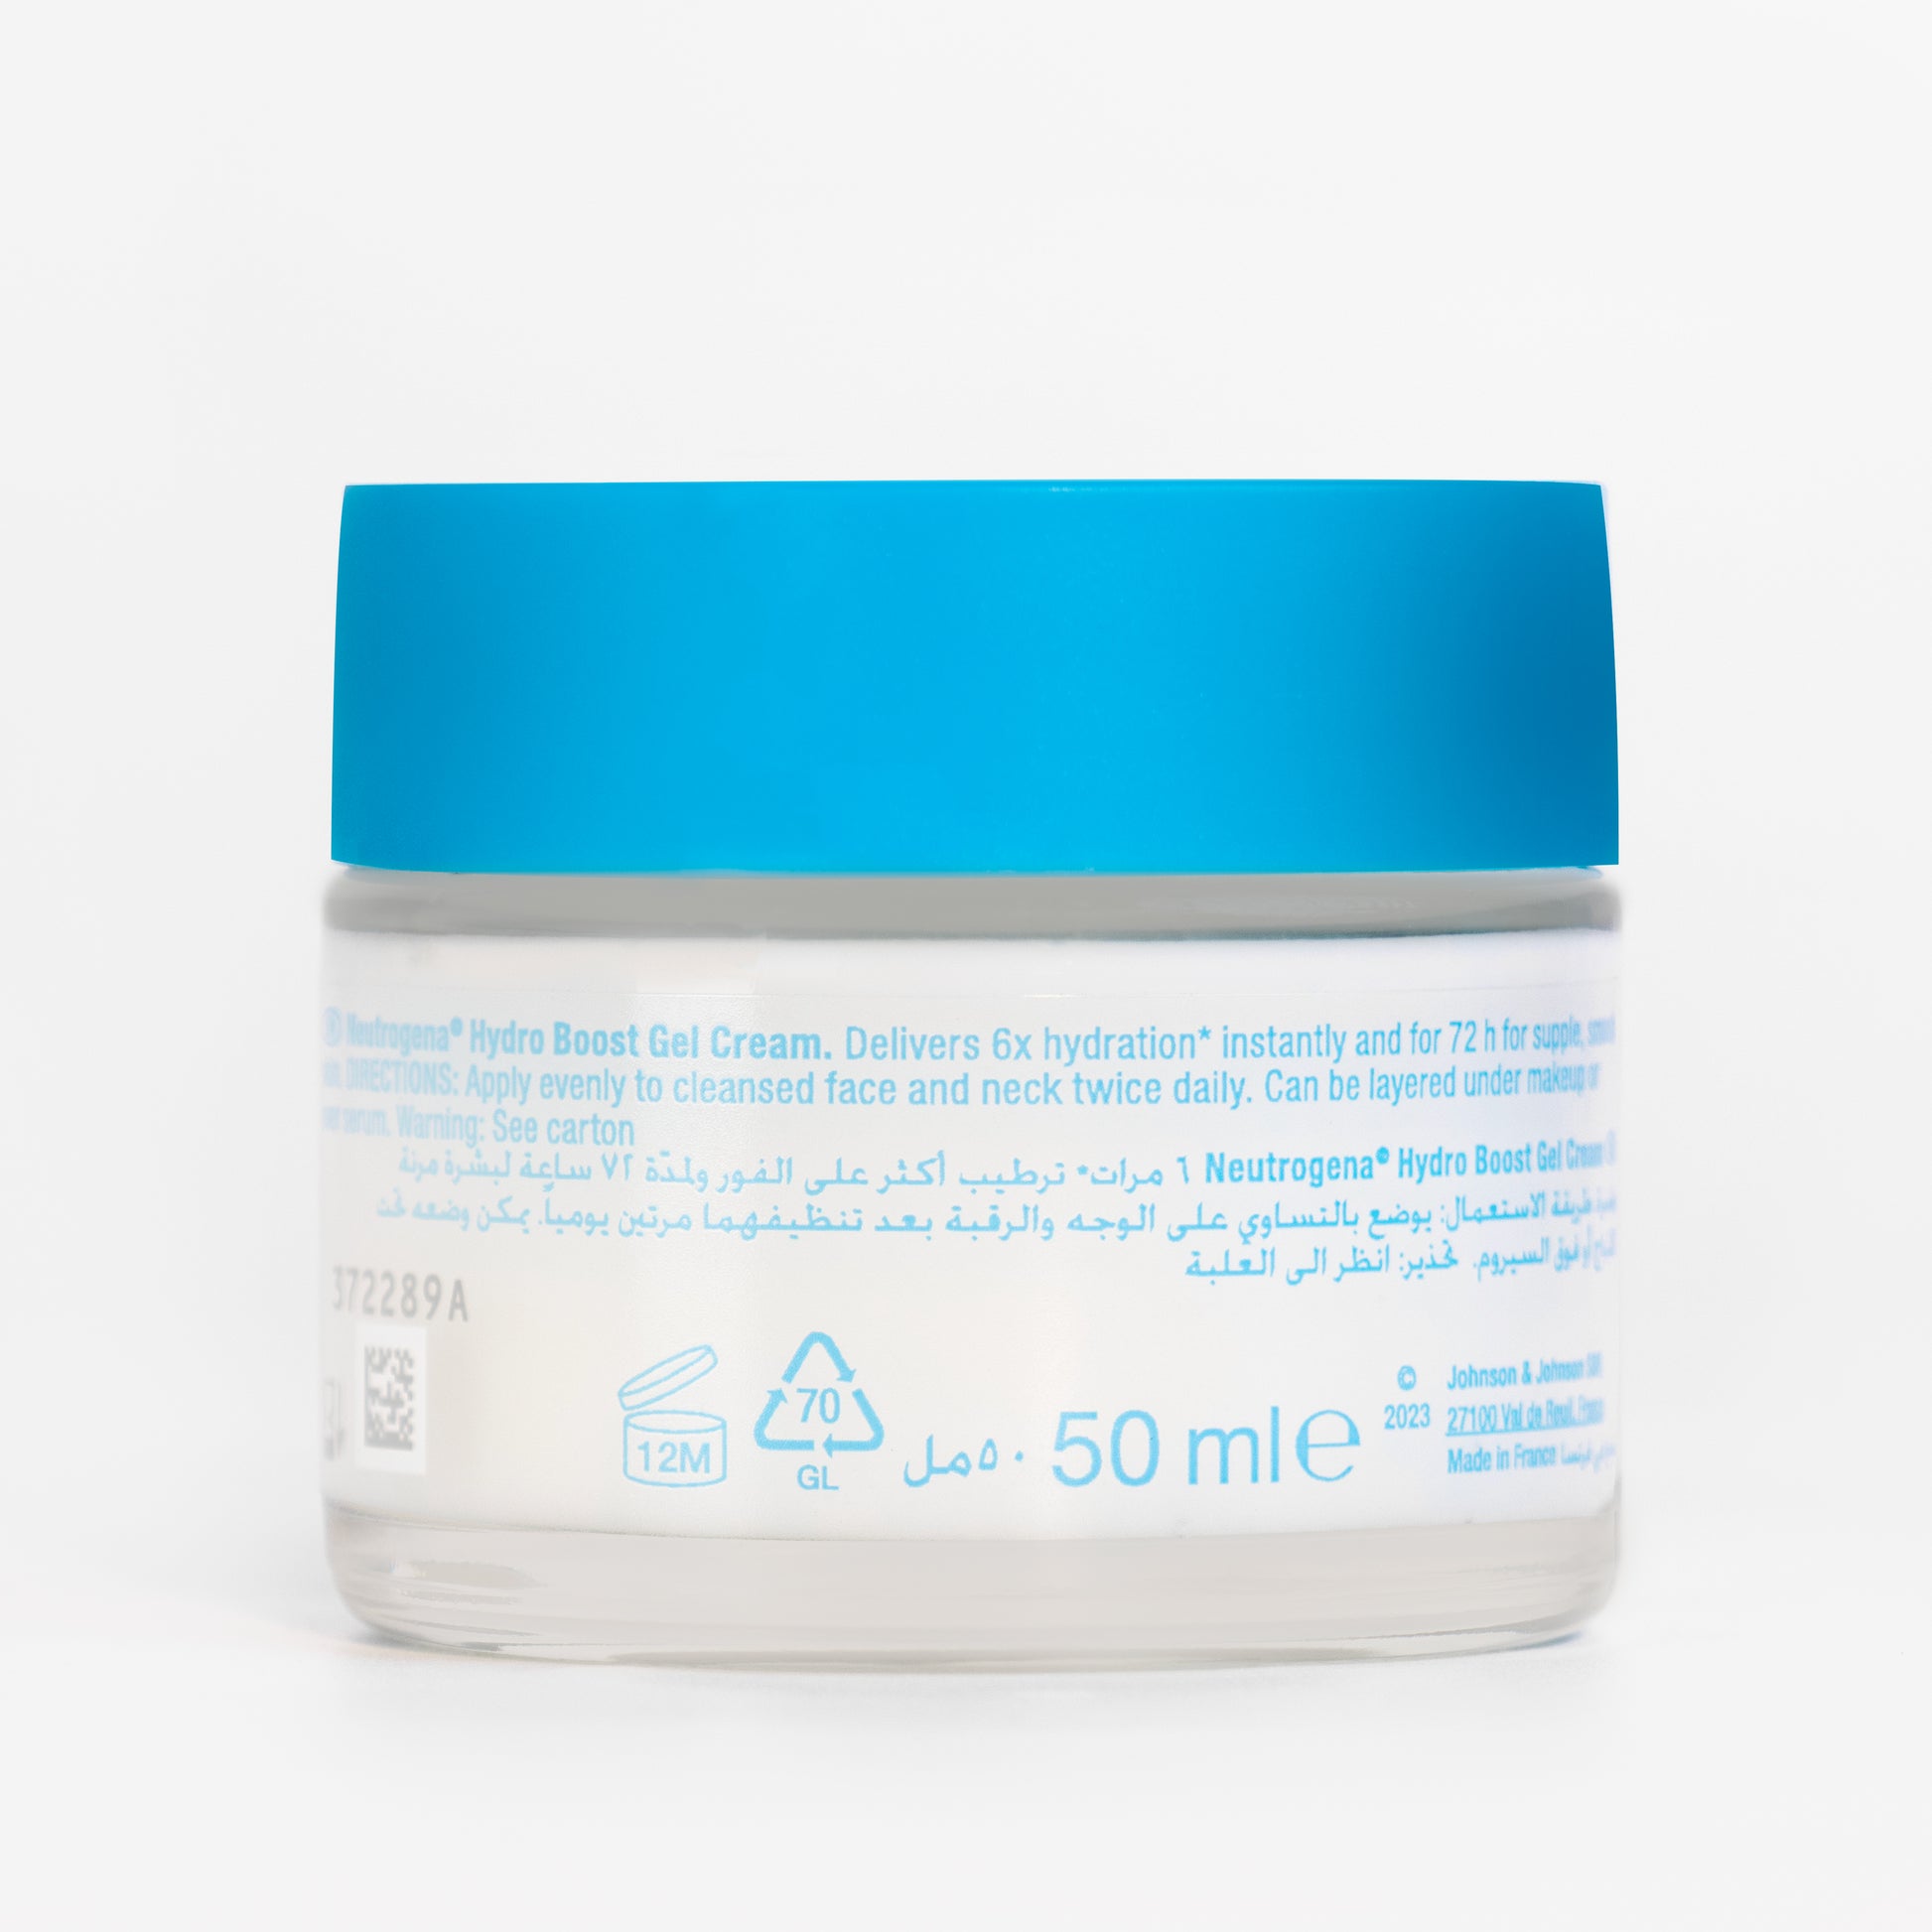 Neutrogena Hydro Boost Gel Cream Moisturizer - 50ml